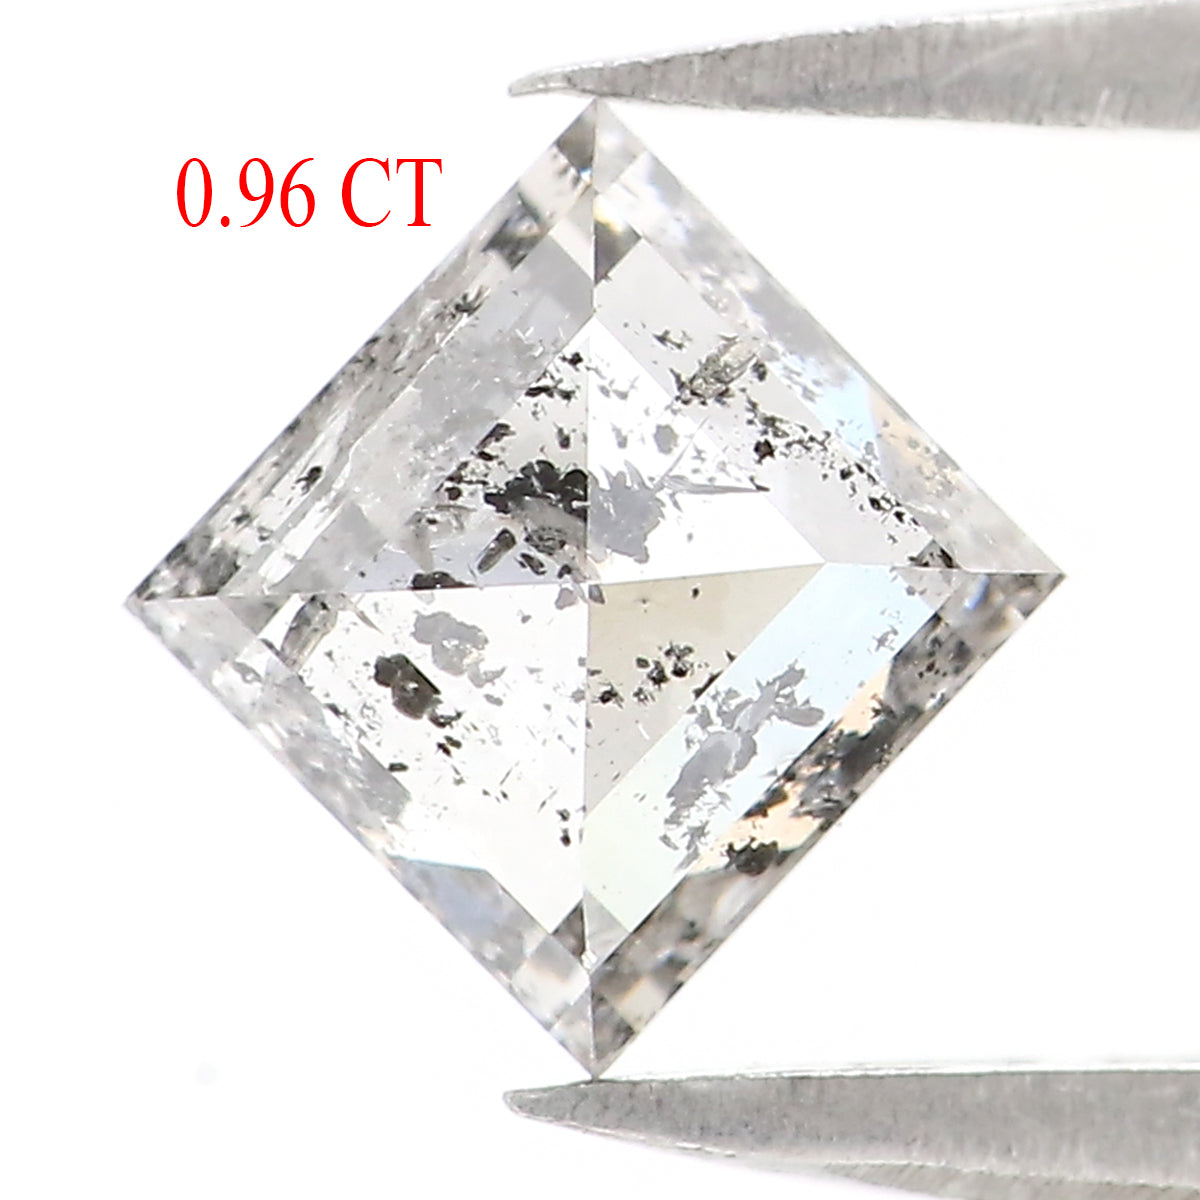 0.96 CT Natural Loose Kite Shape Diamond Salt And Pepper Kite Cut Diamond 7.75 MM Black Grey Color Kite Shape Rose Cut Diamond QL2757